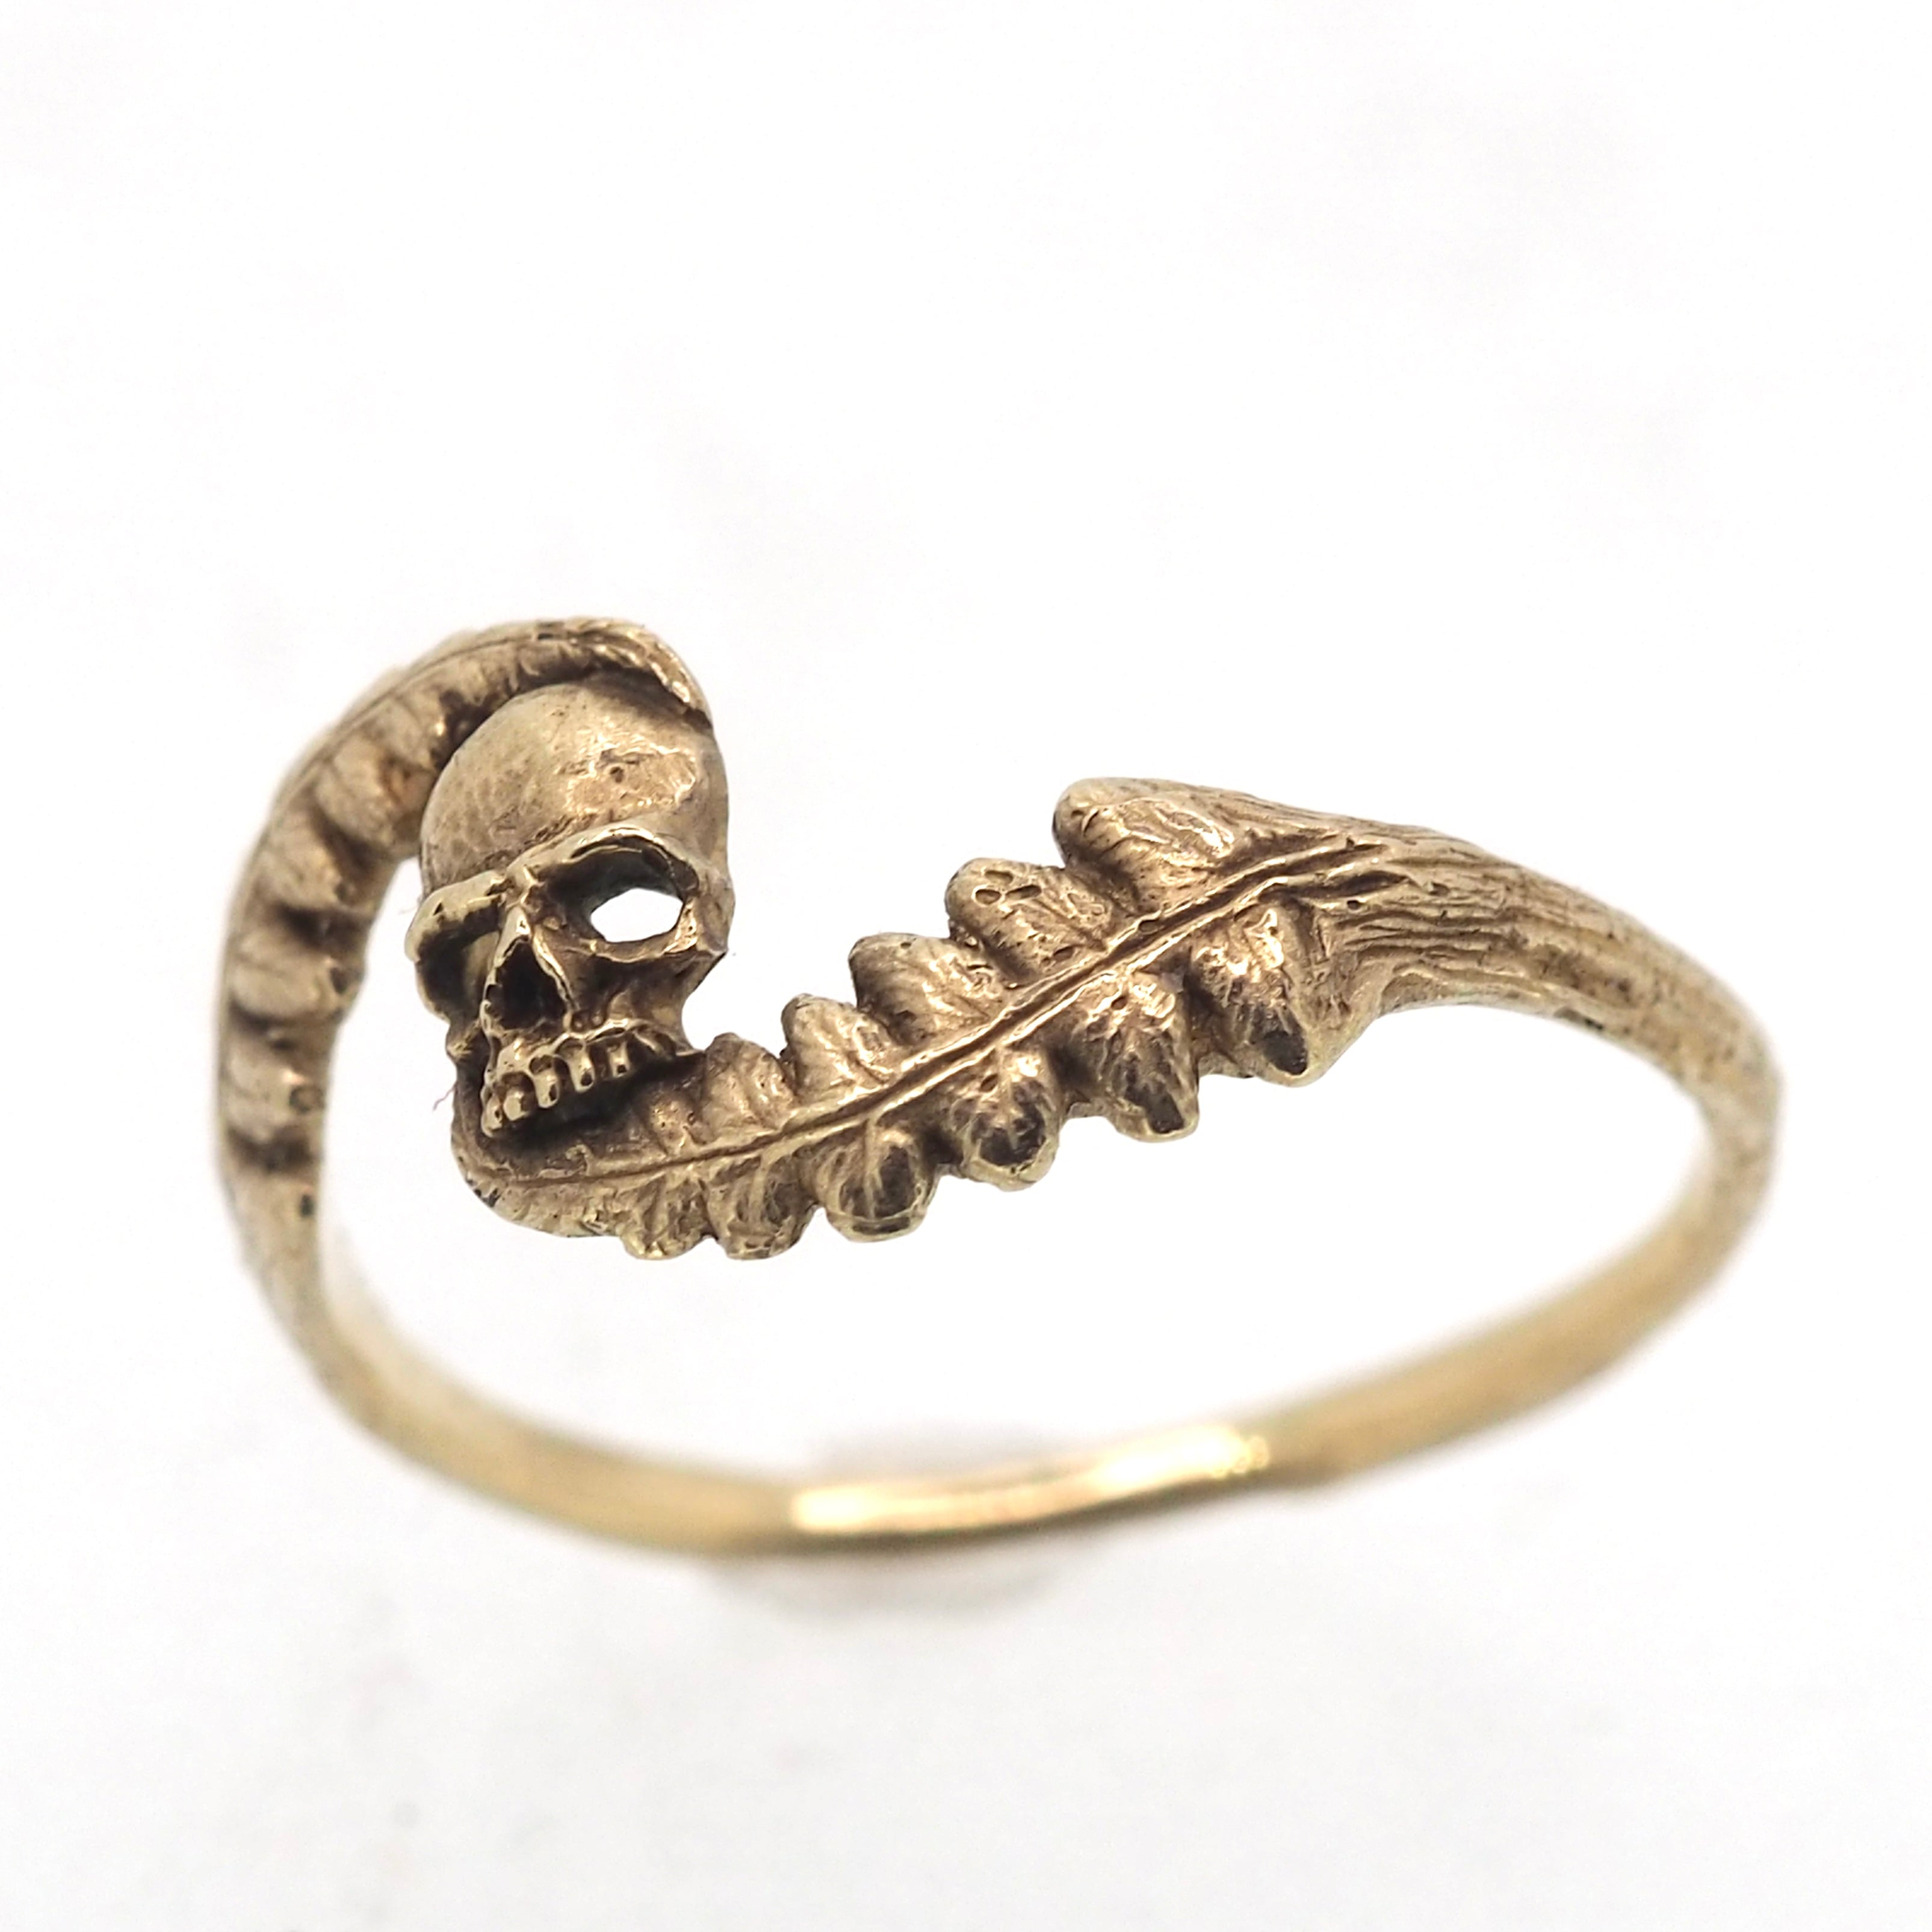 Swirly fern and skull ring gold